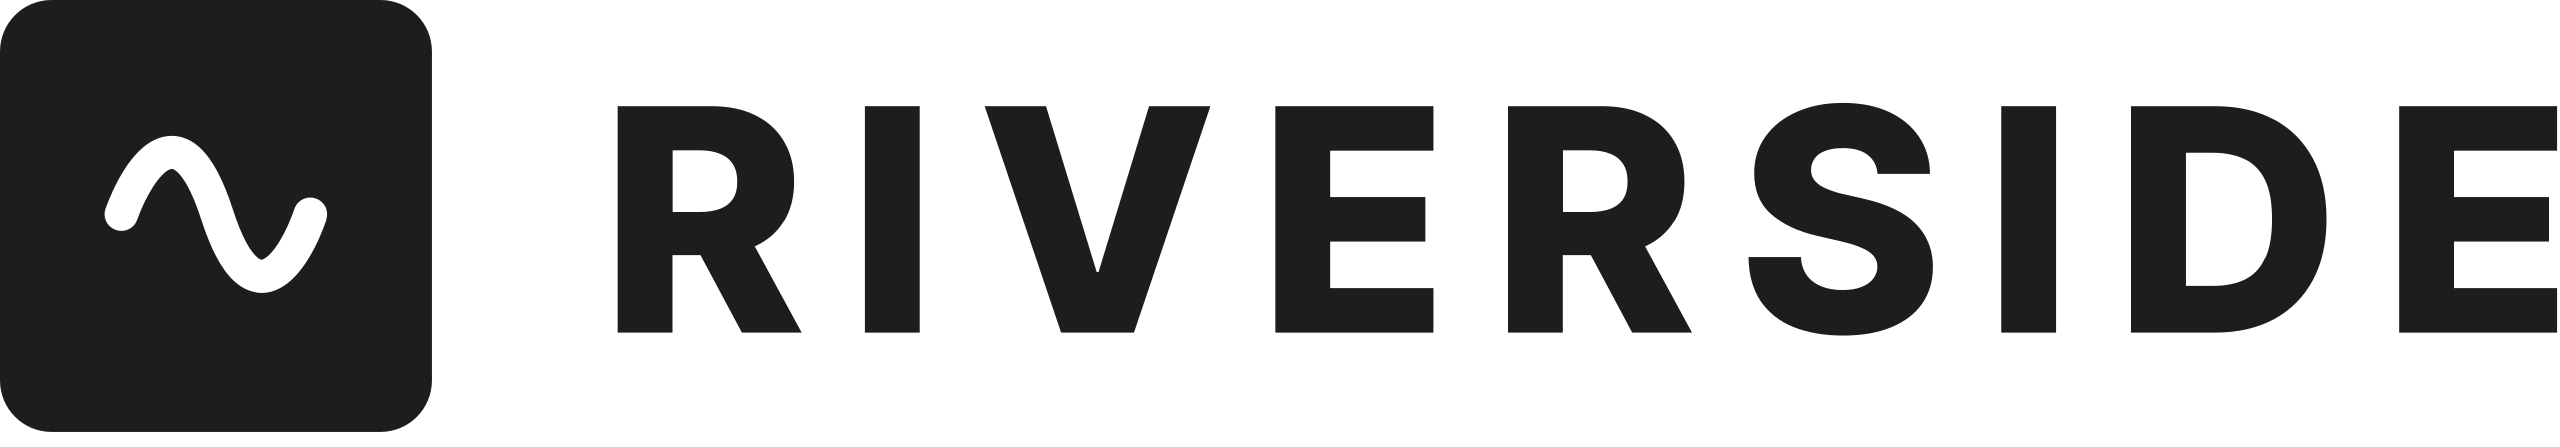 Riverside FM logo